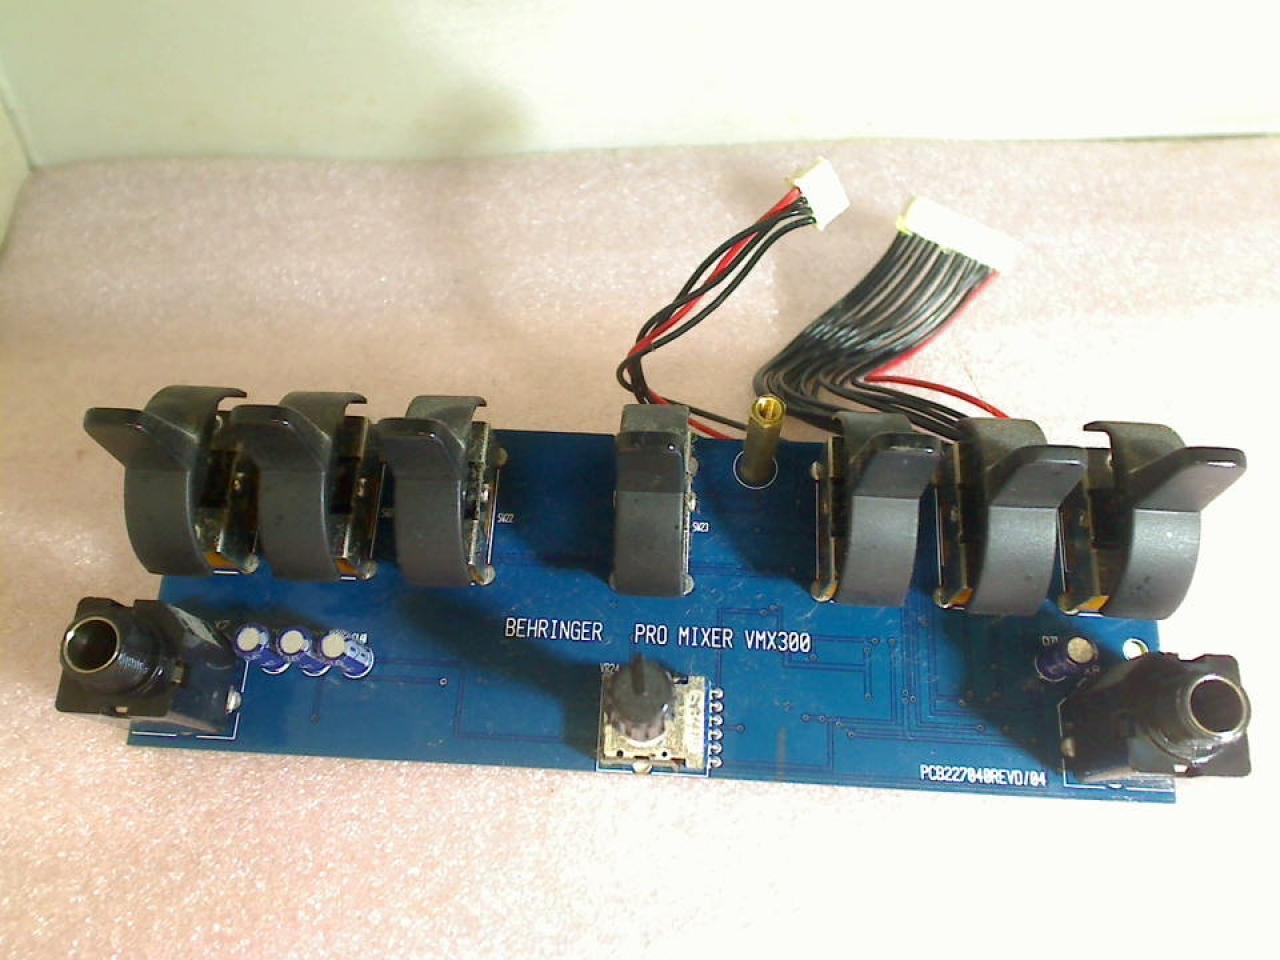 Electronic Board Panel PCB227040REVD/04 Behringer Pro Mixer VMX300